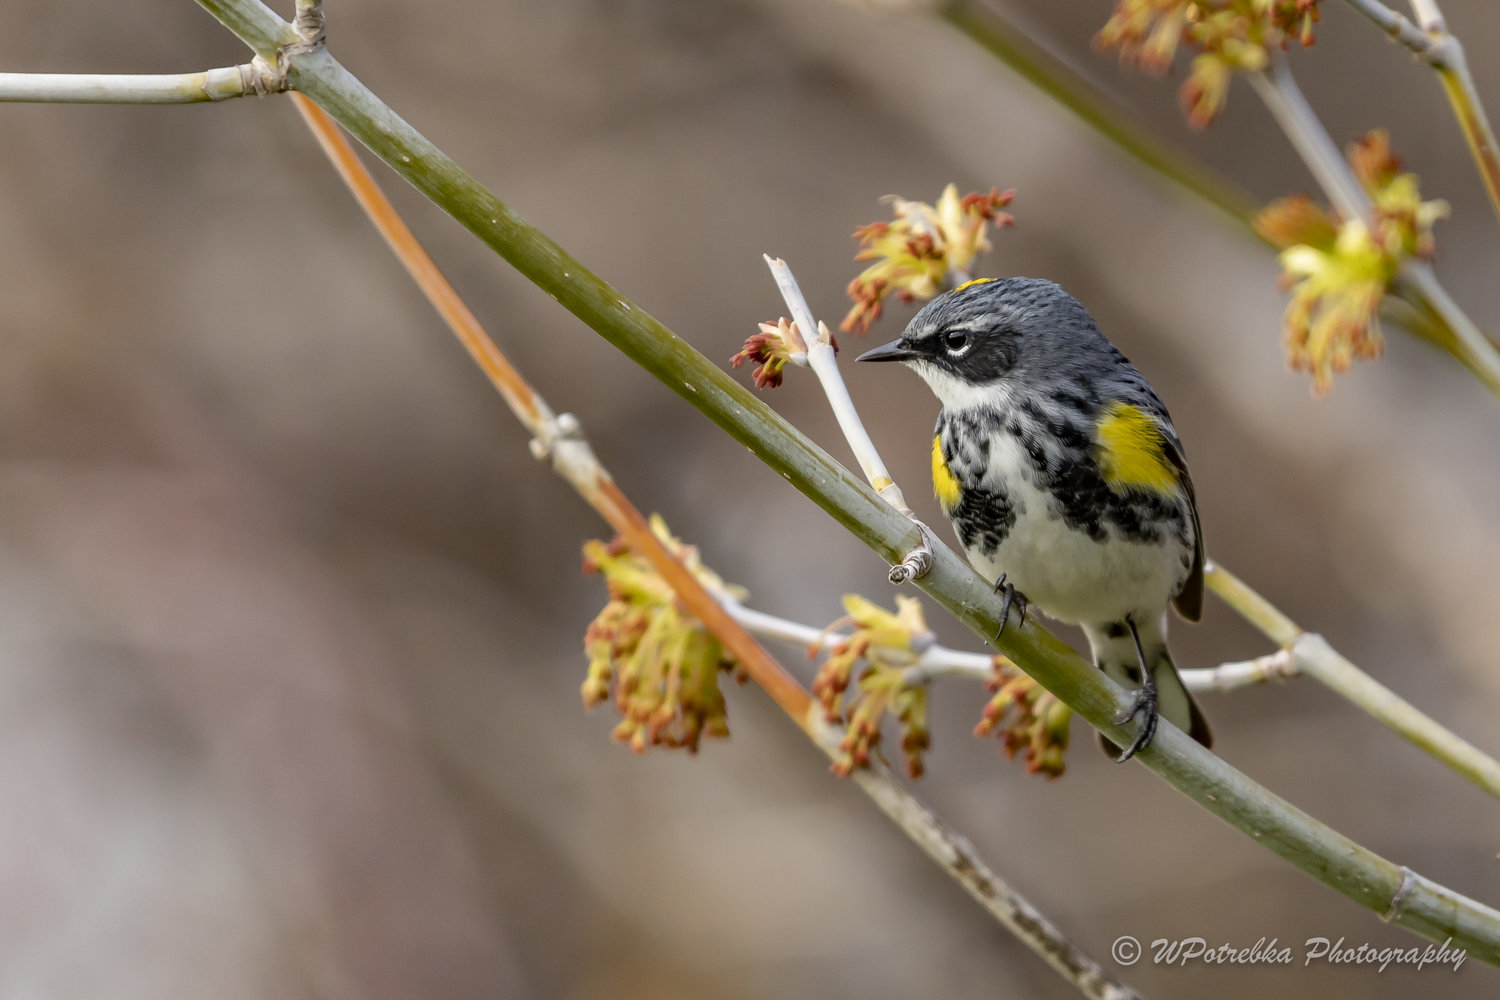 Start of spring migration has Manitoba birdwatchers flocking together